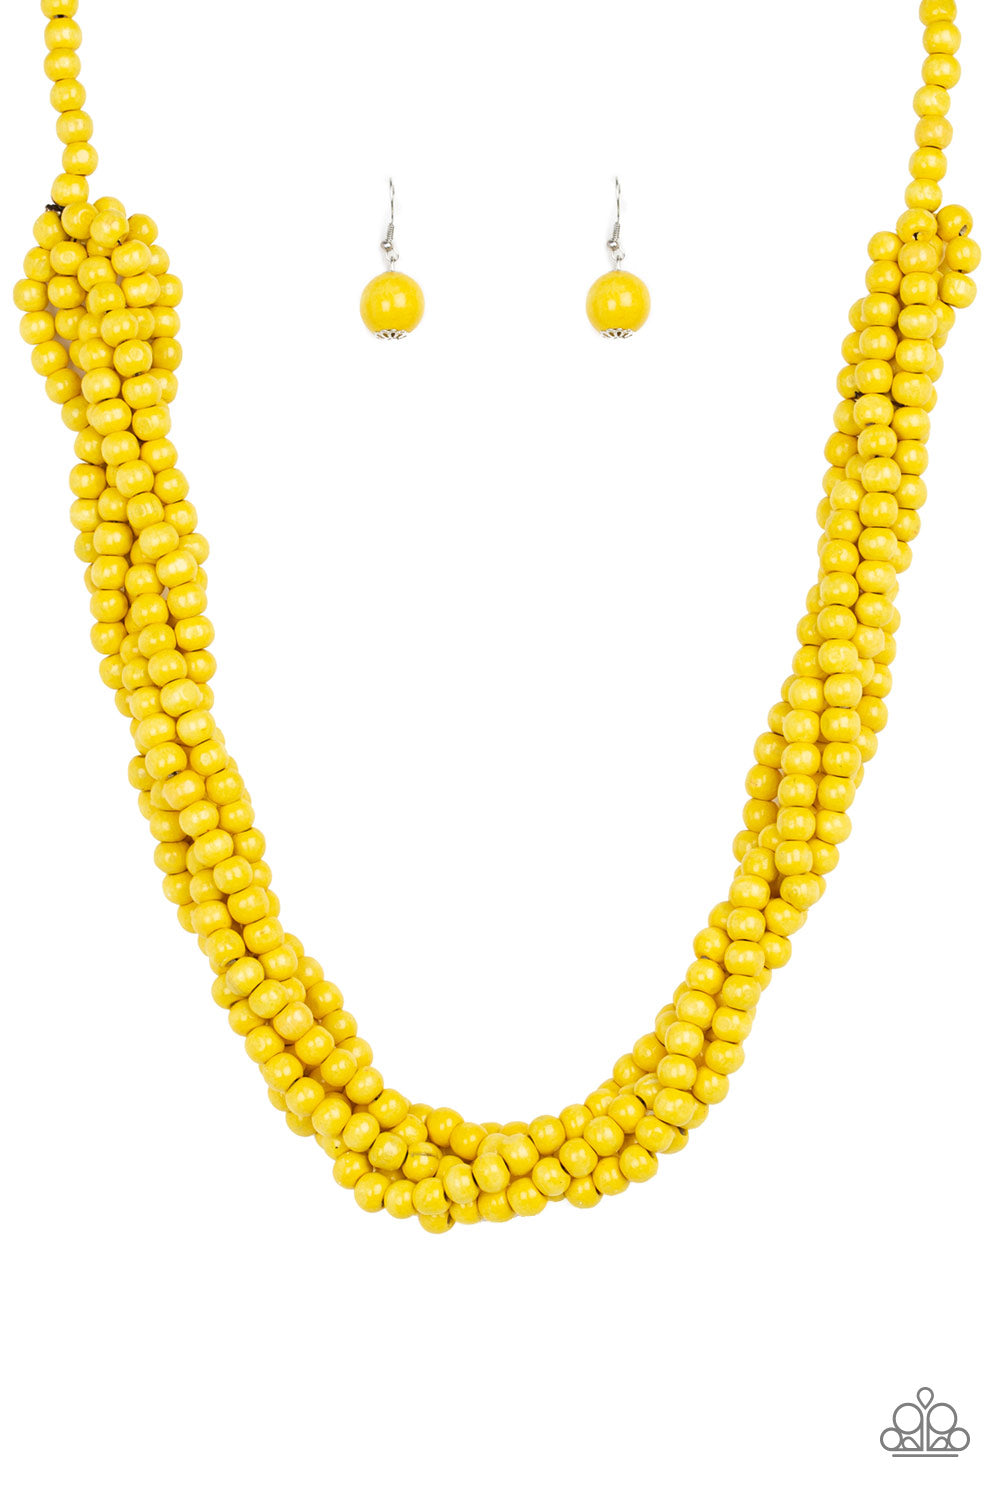 Paparazzi Accessories  - Tahiti Tropic - #N126 Yellow Necklace